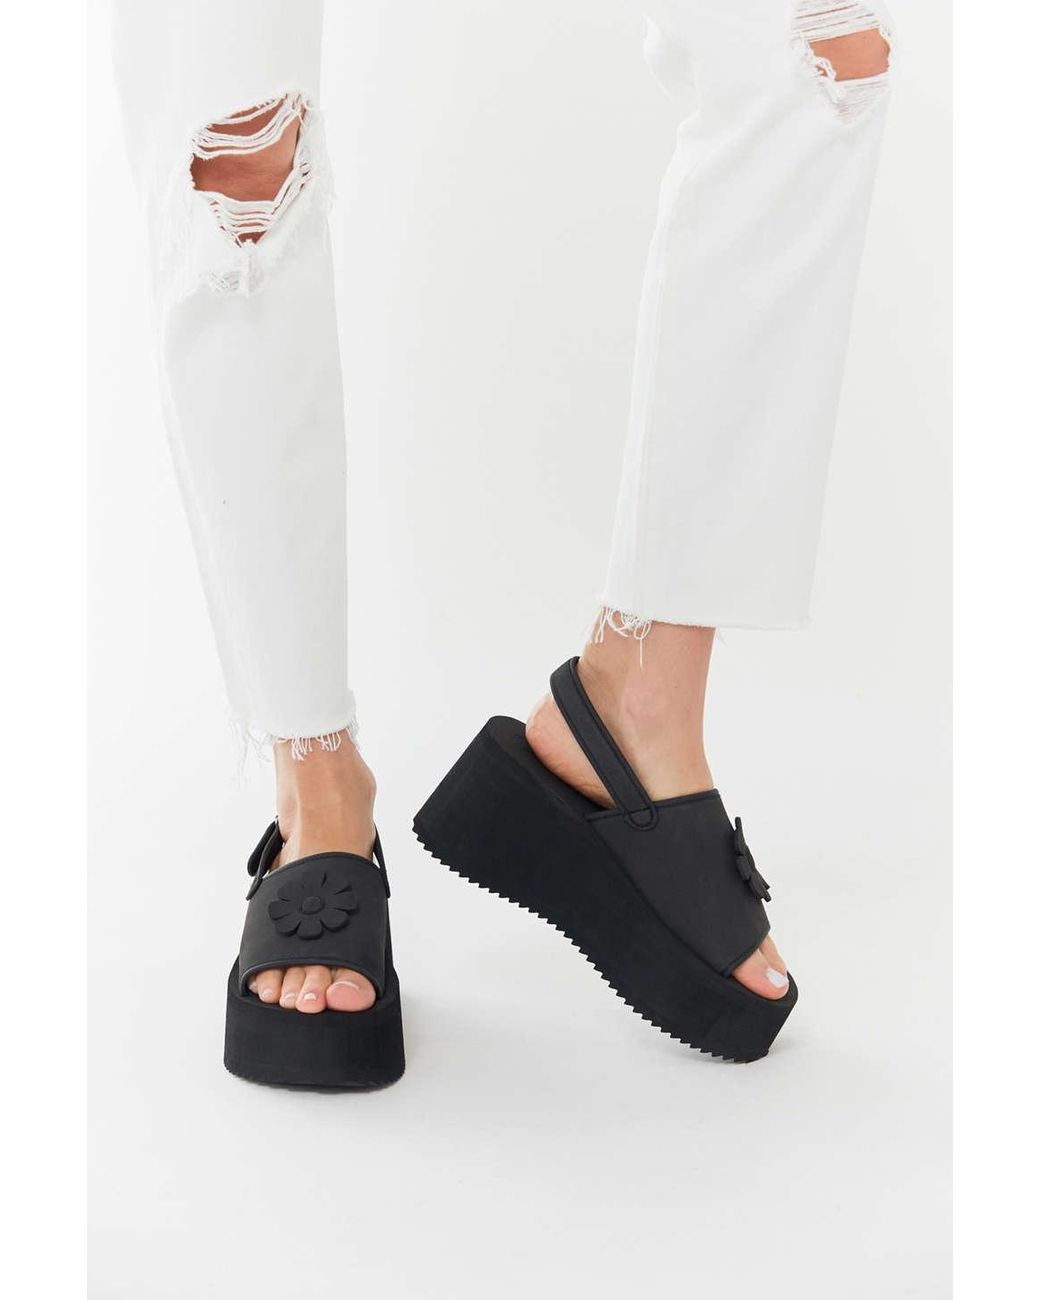 Urban Outfitters Uo Zoe Eva Platform Sandal in Black | Lyst